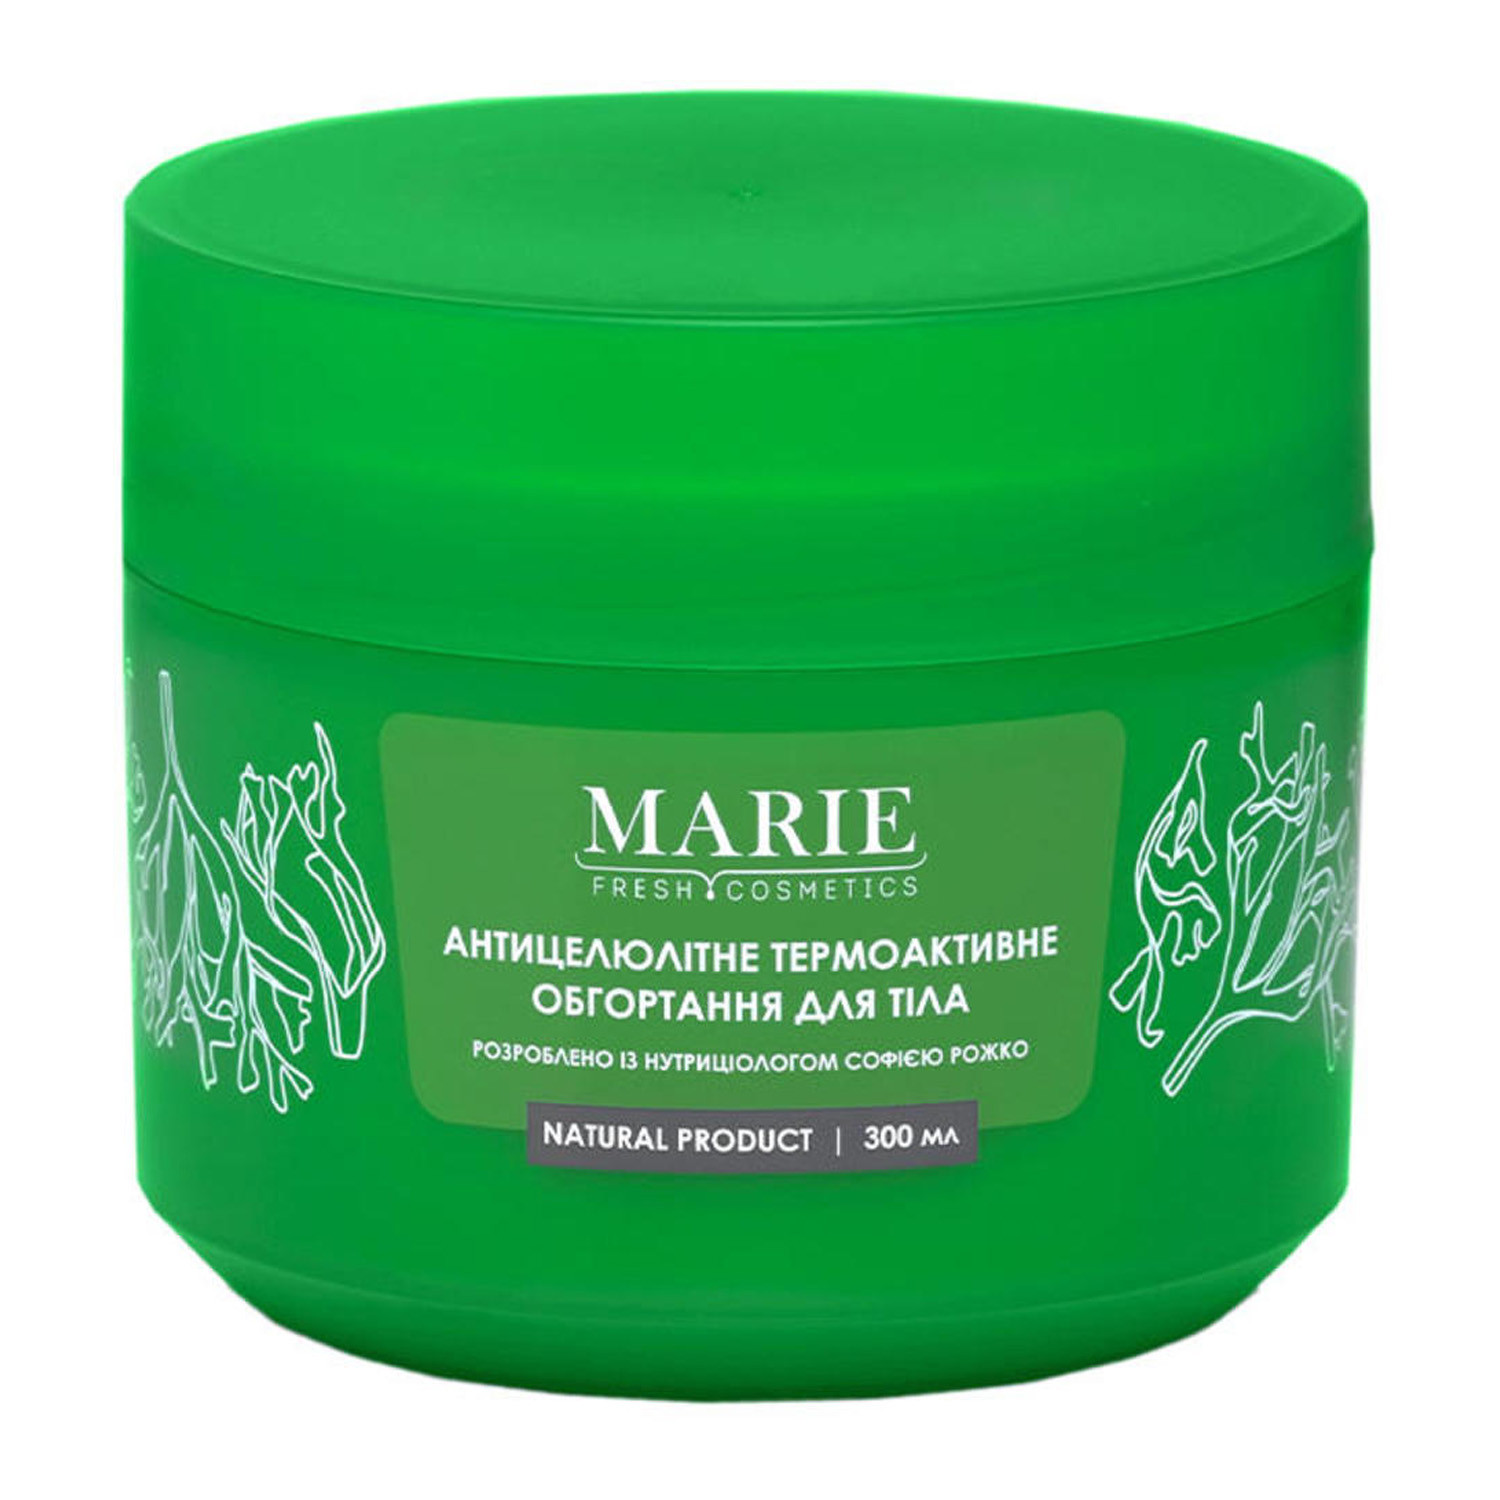 Marie Fresh Cosmetics Антицеллюлитное термоактивное обертывание для тела